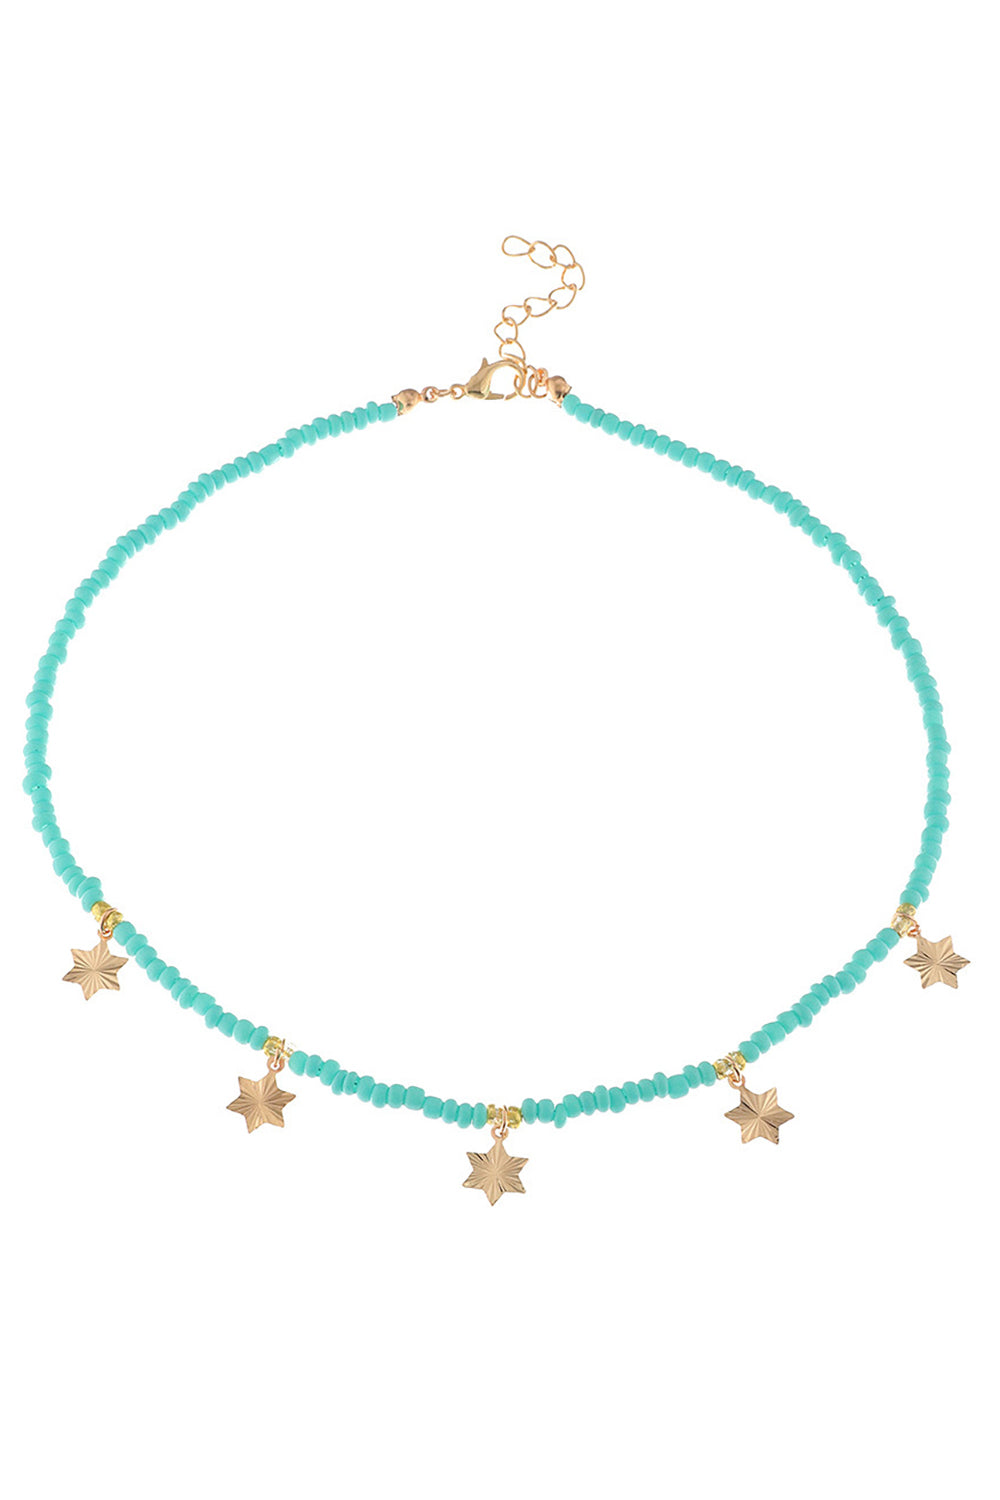 Blue Boho Style Necklace With Stars